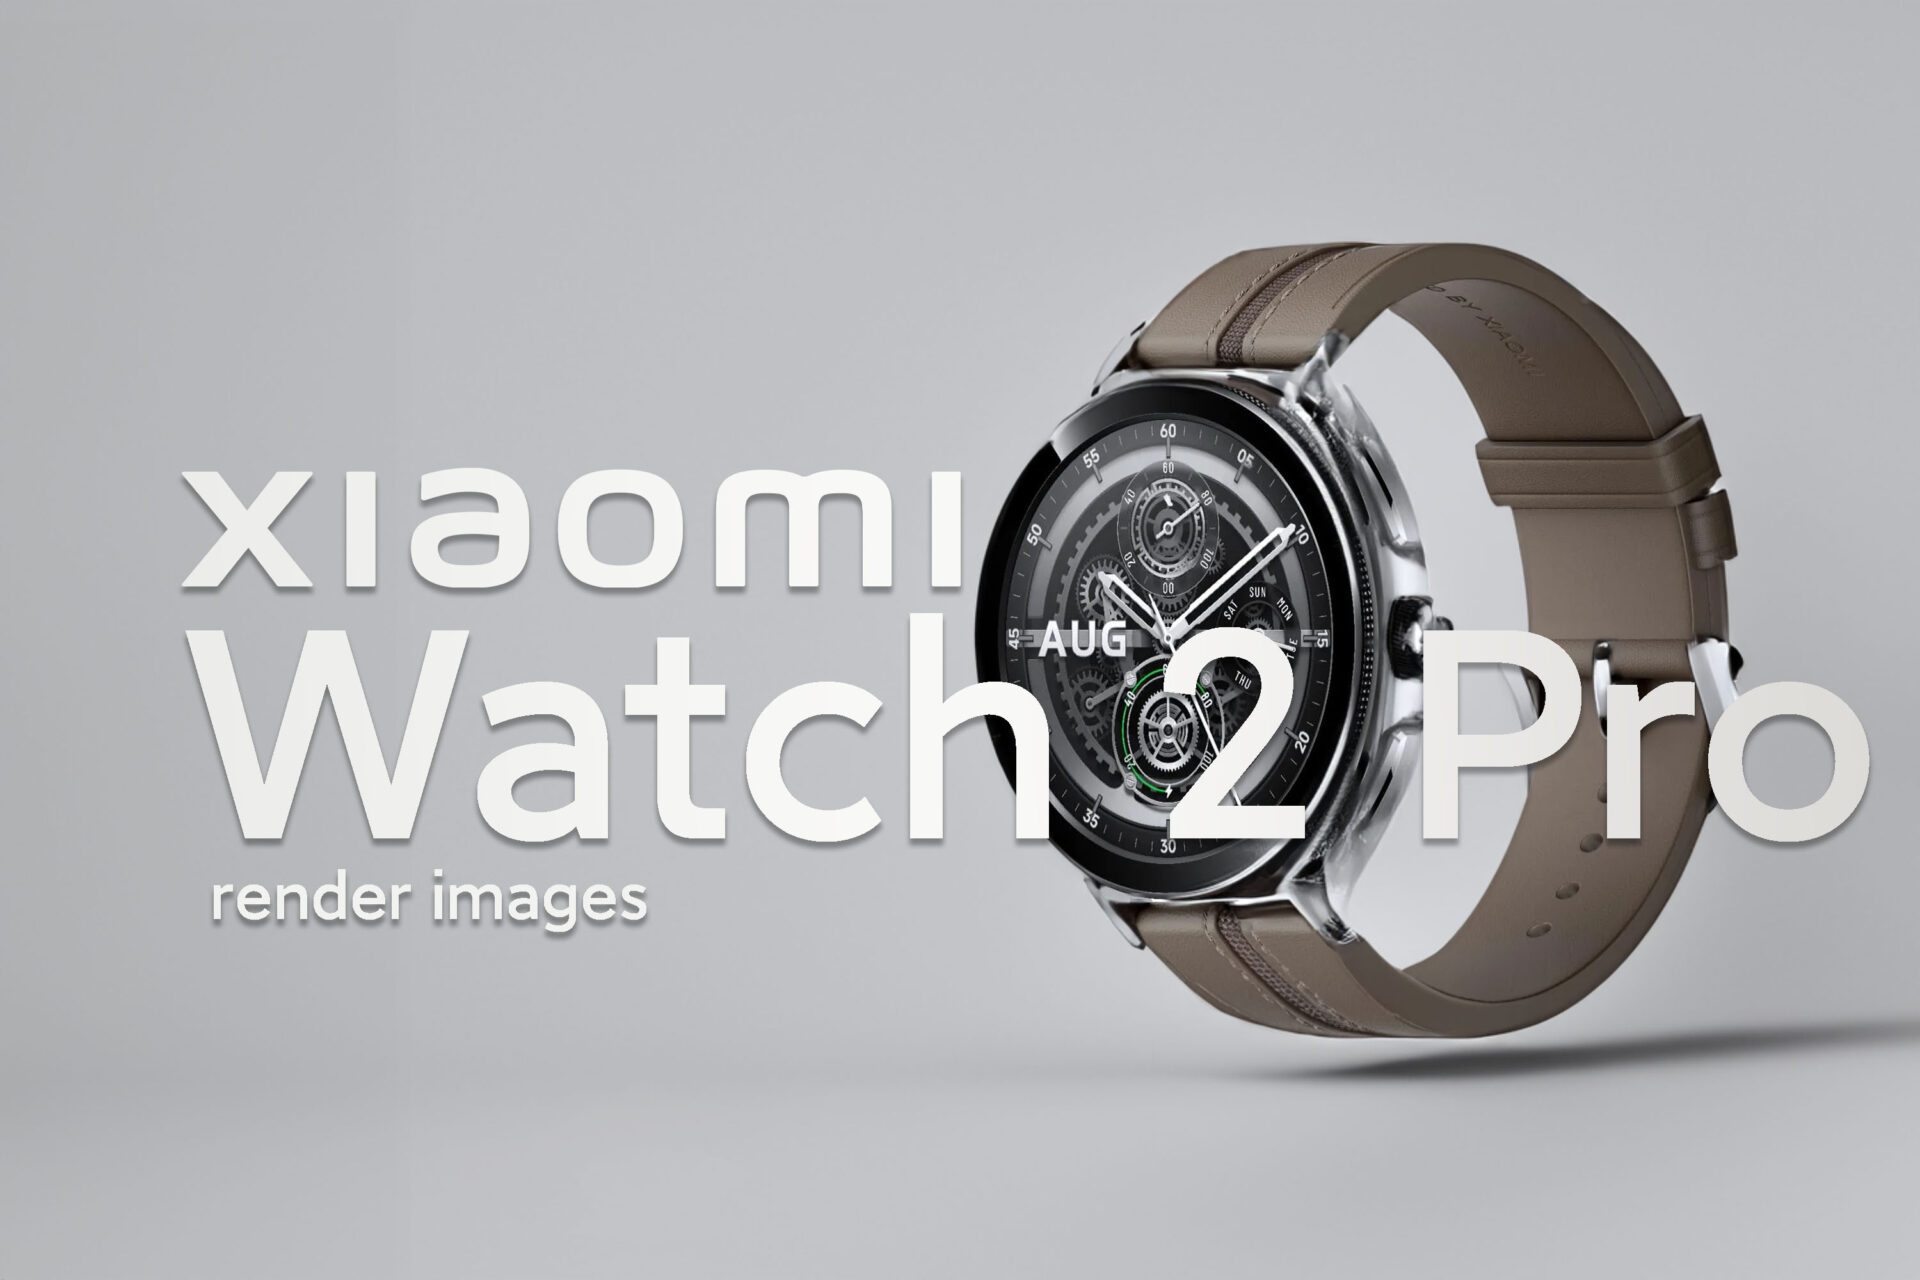 Xiaomi Watch 2 Pro render images reveal a premium design! 